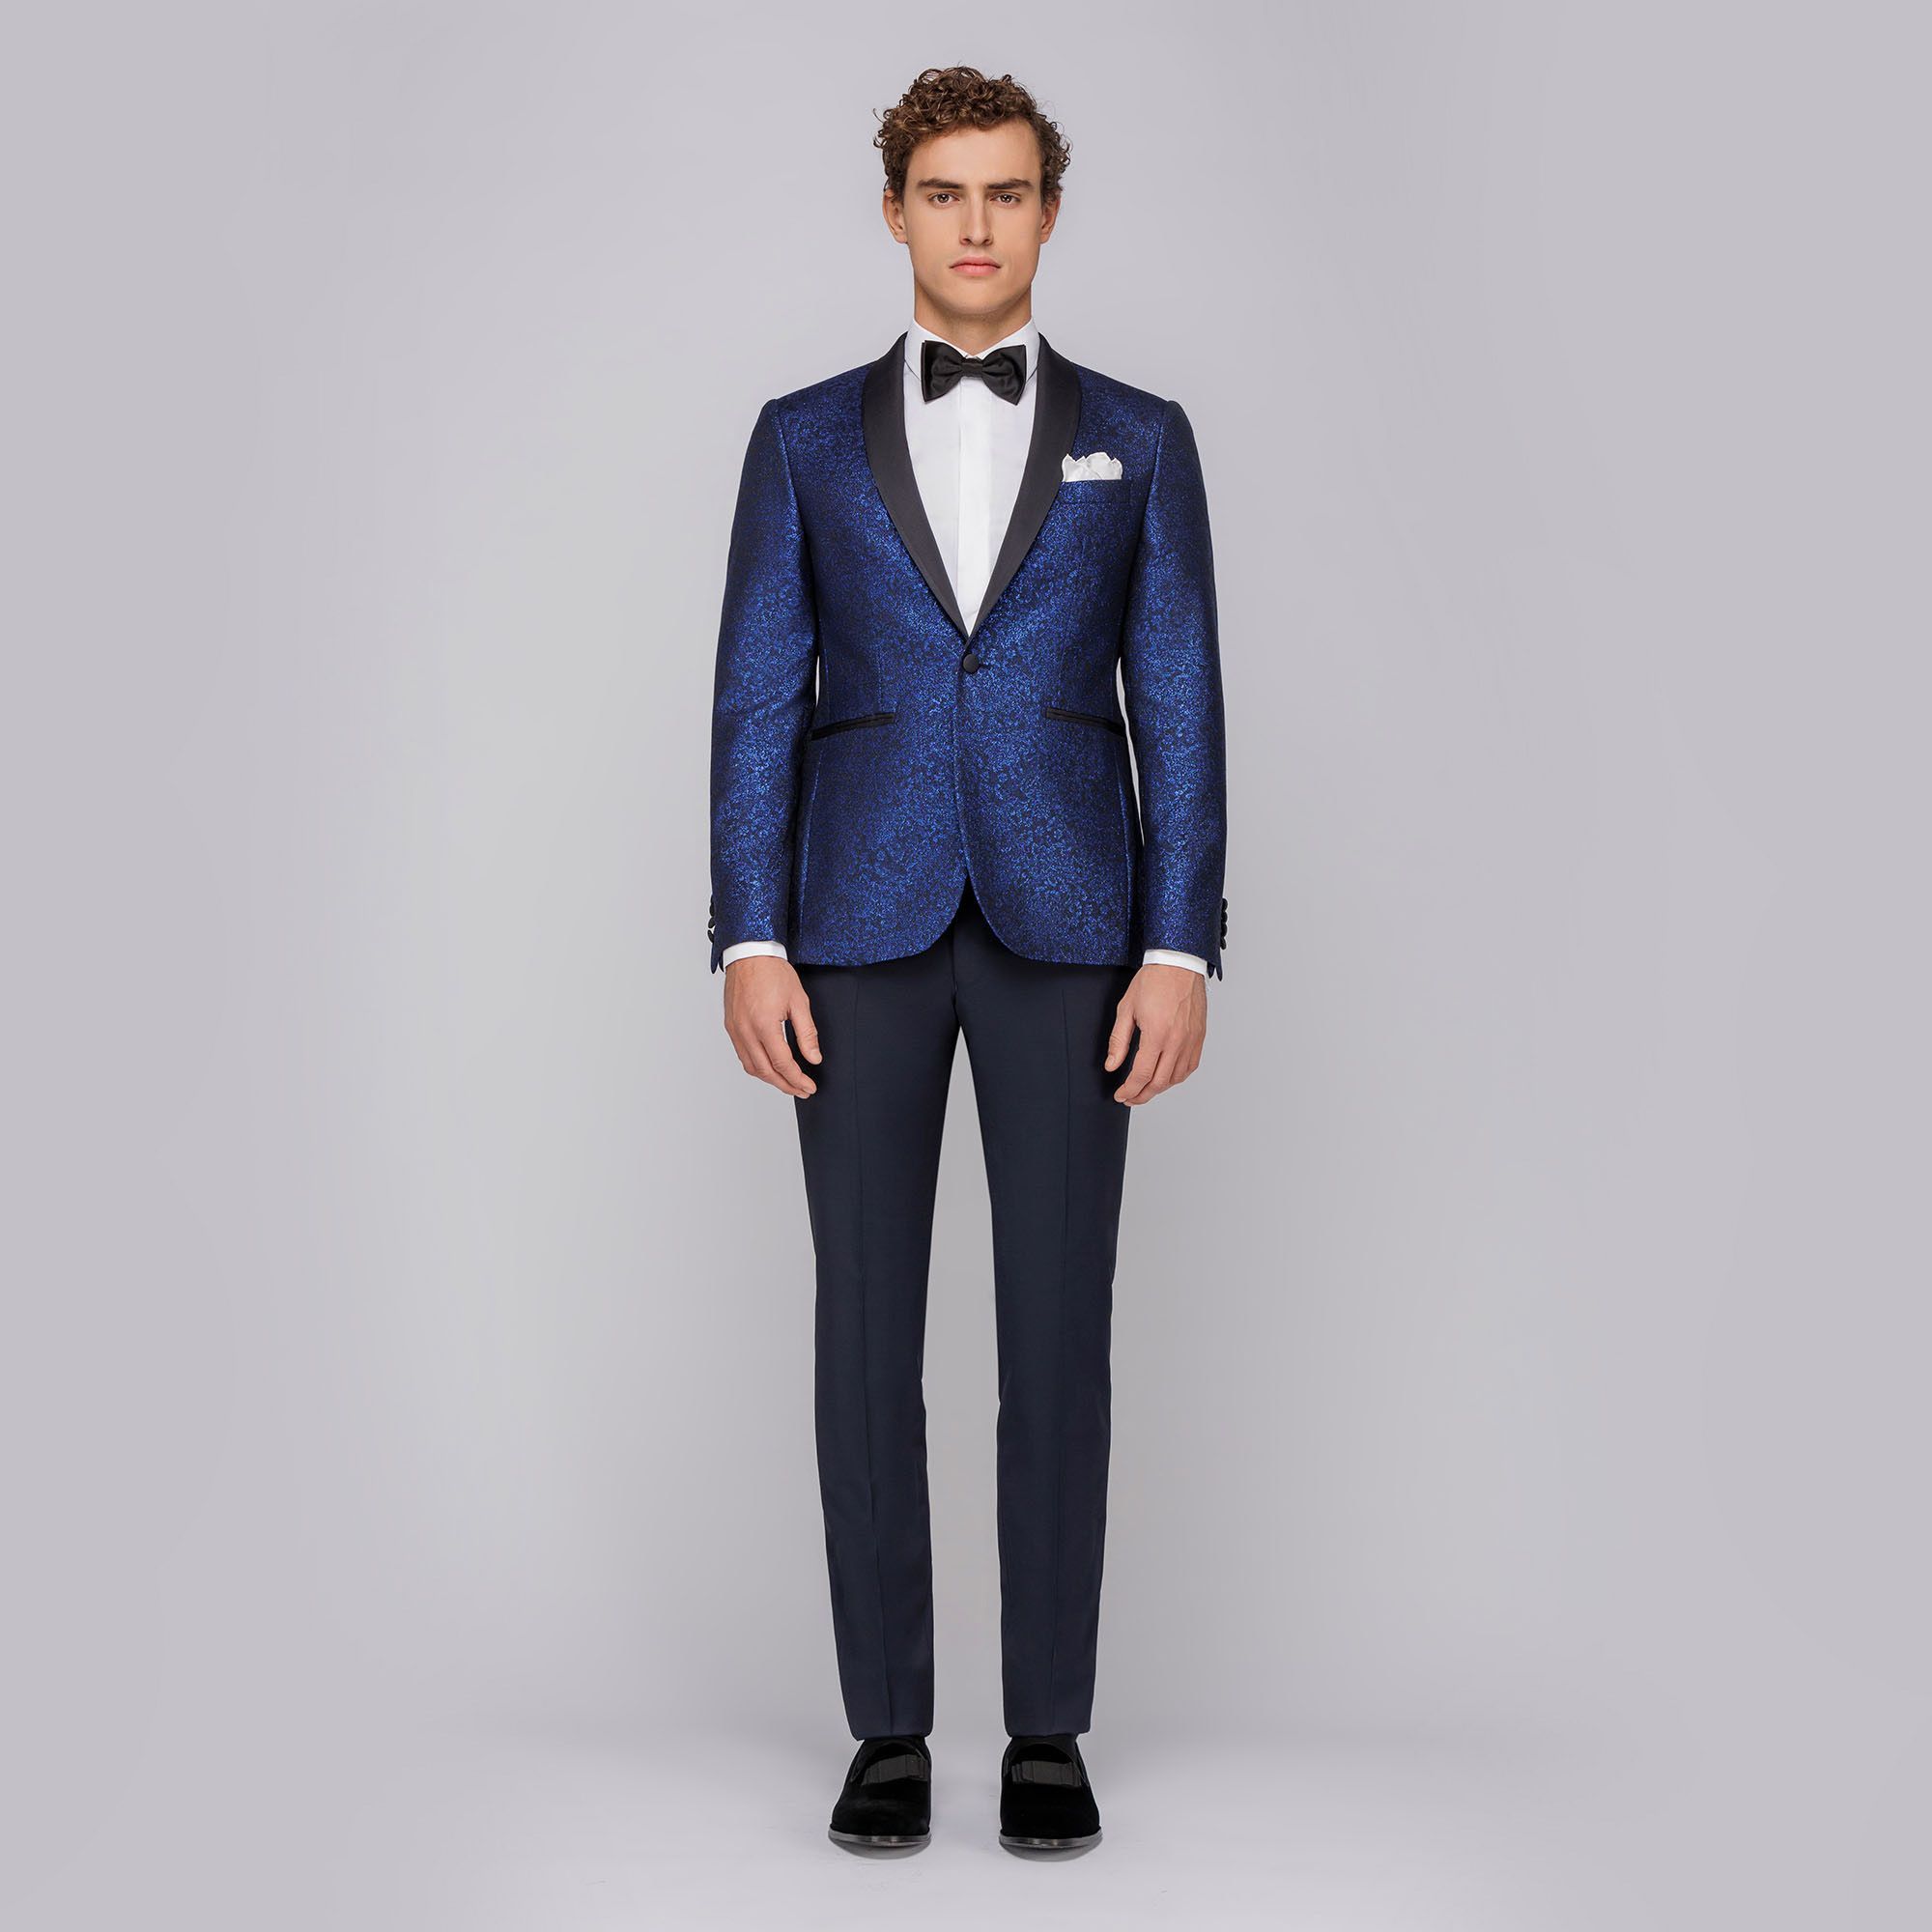 Wedding tuxedo suit blue